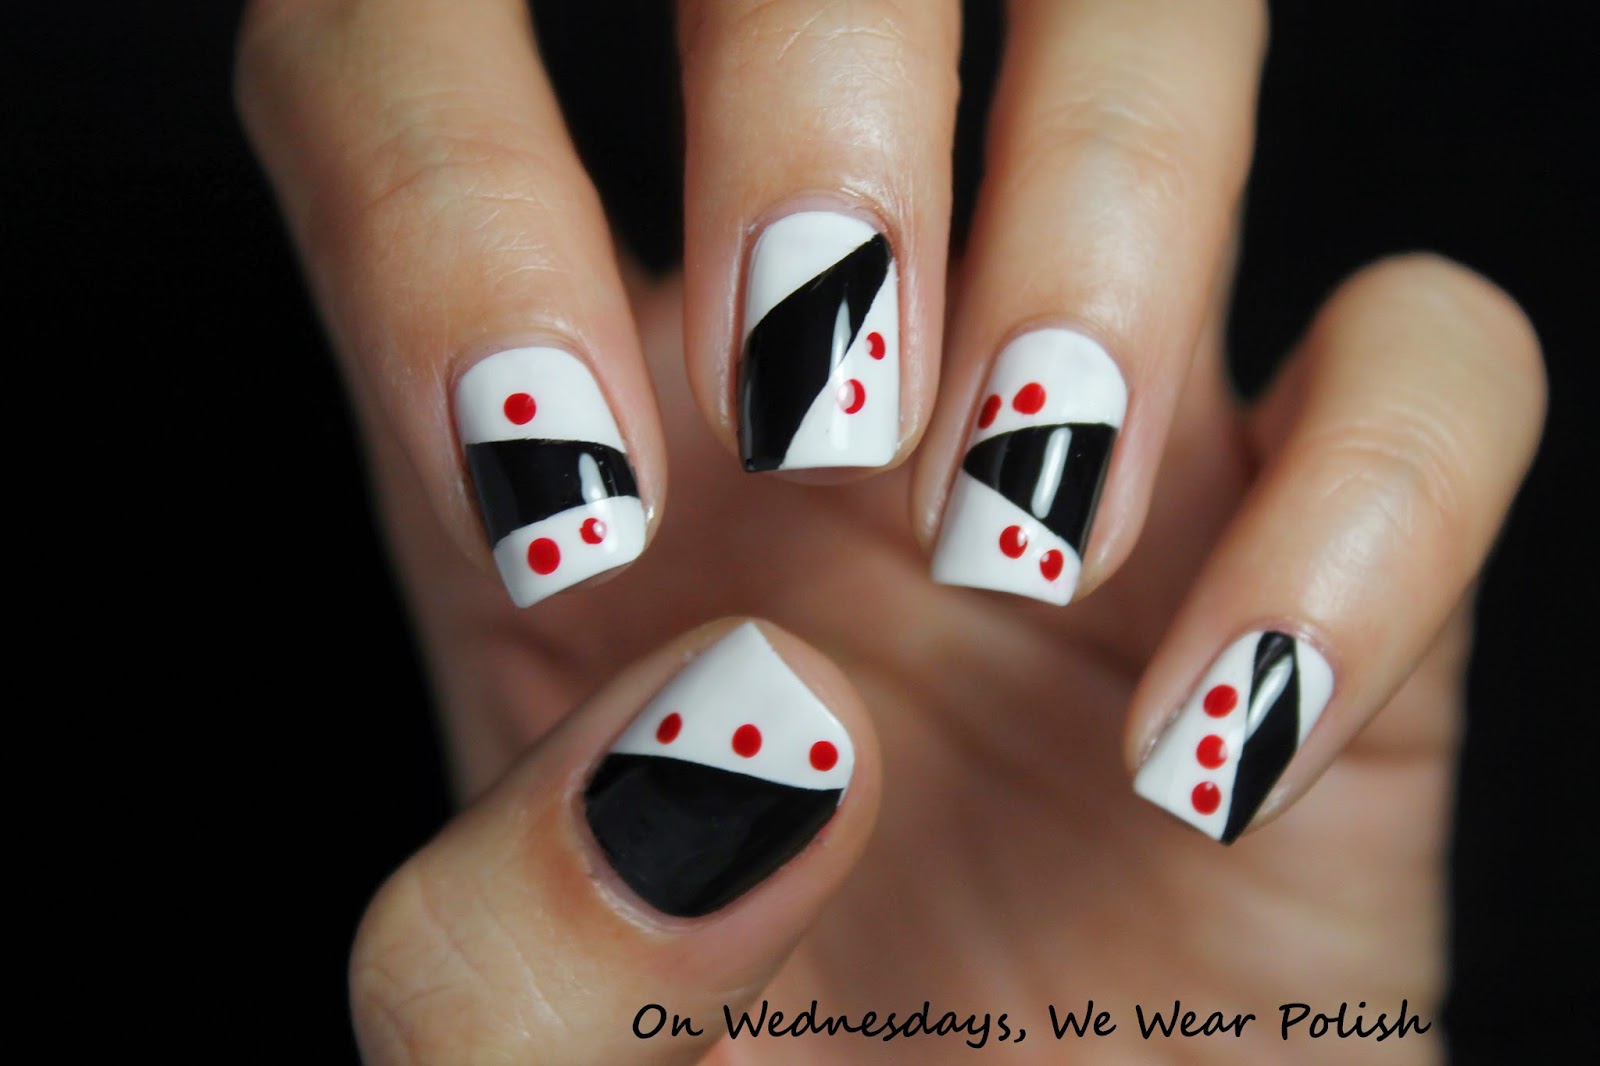 On Wednesdays, We Wear Polish : Geometric Nail Art